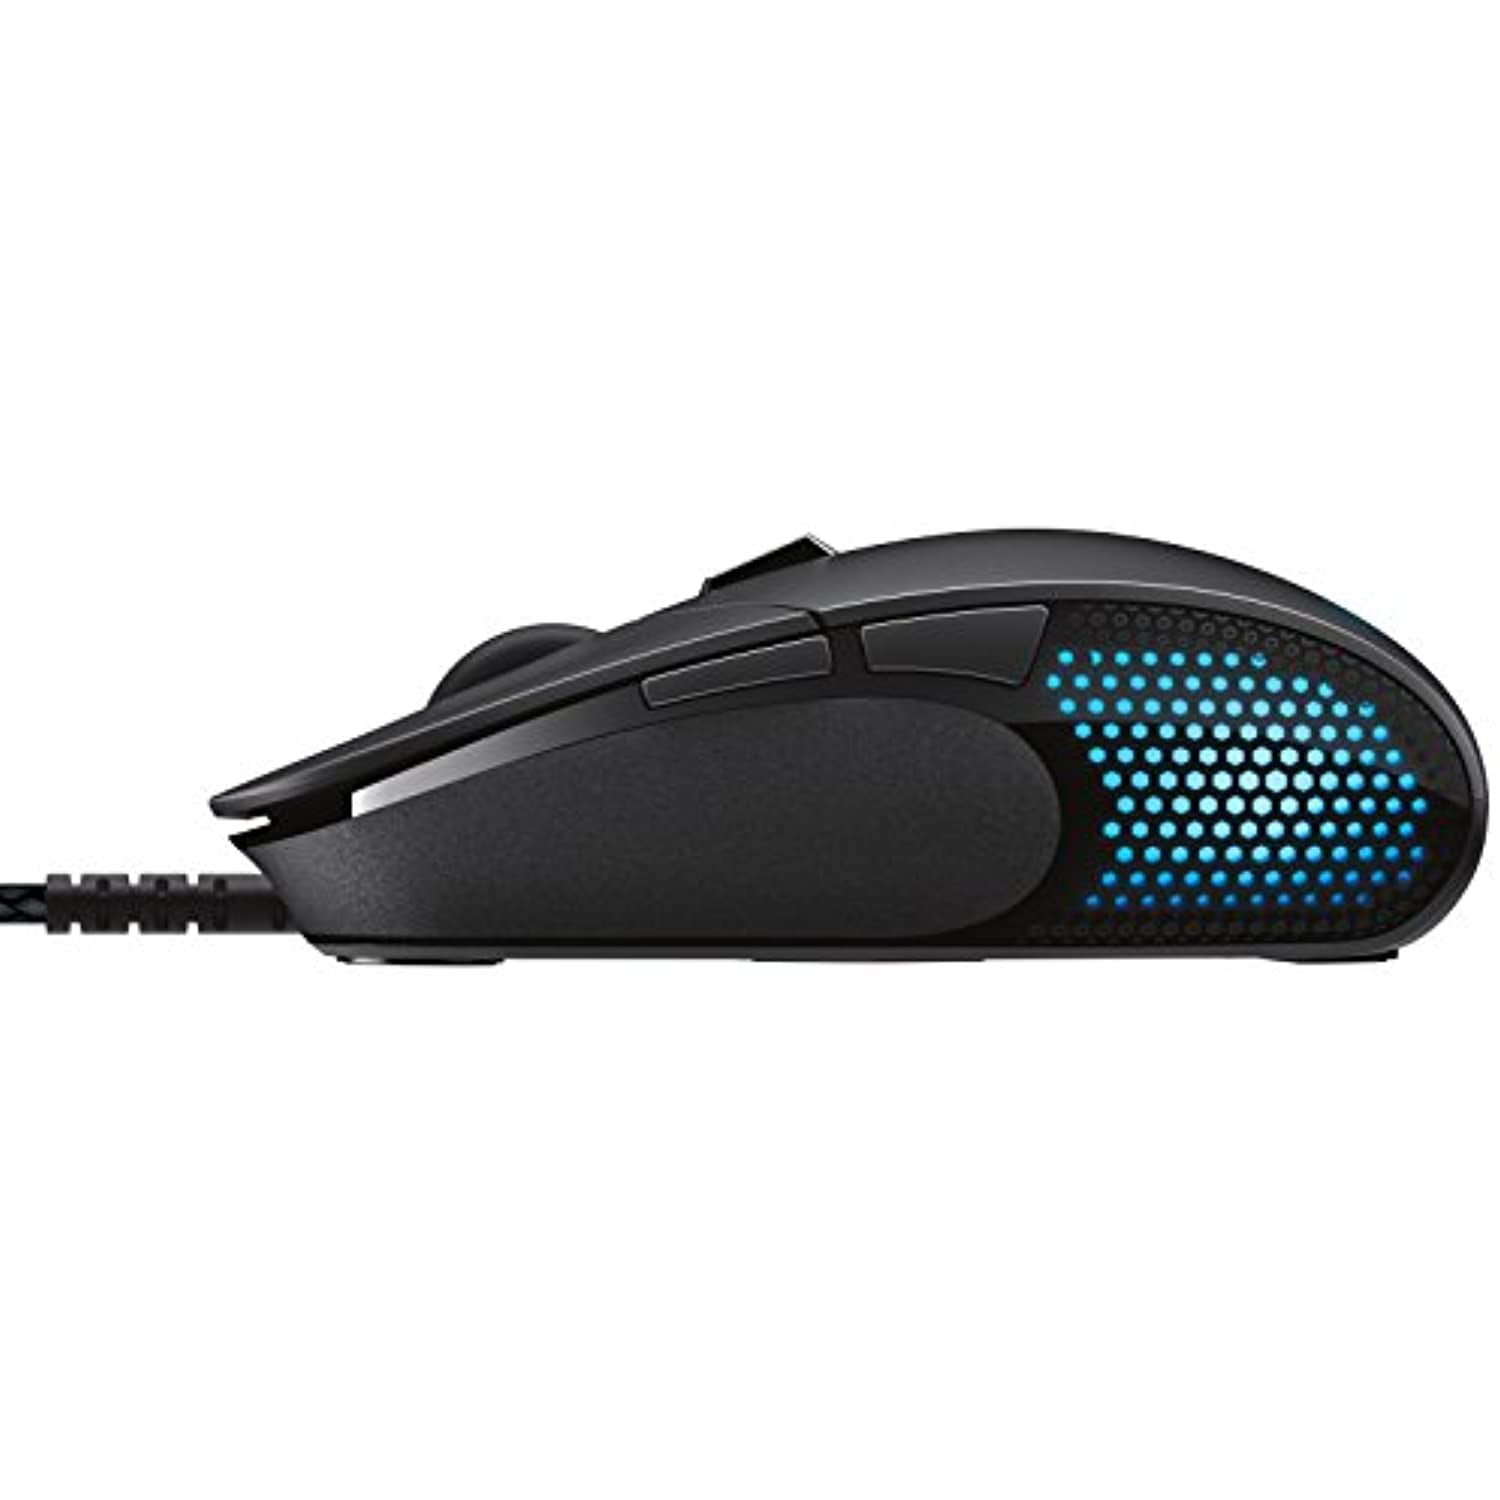 Logitech G303 Daedalus Apex Performance Edition Gaming Mouse Walmart.com